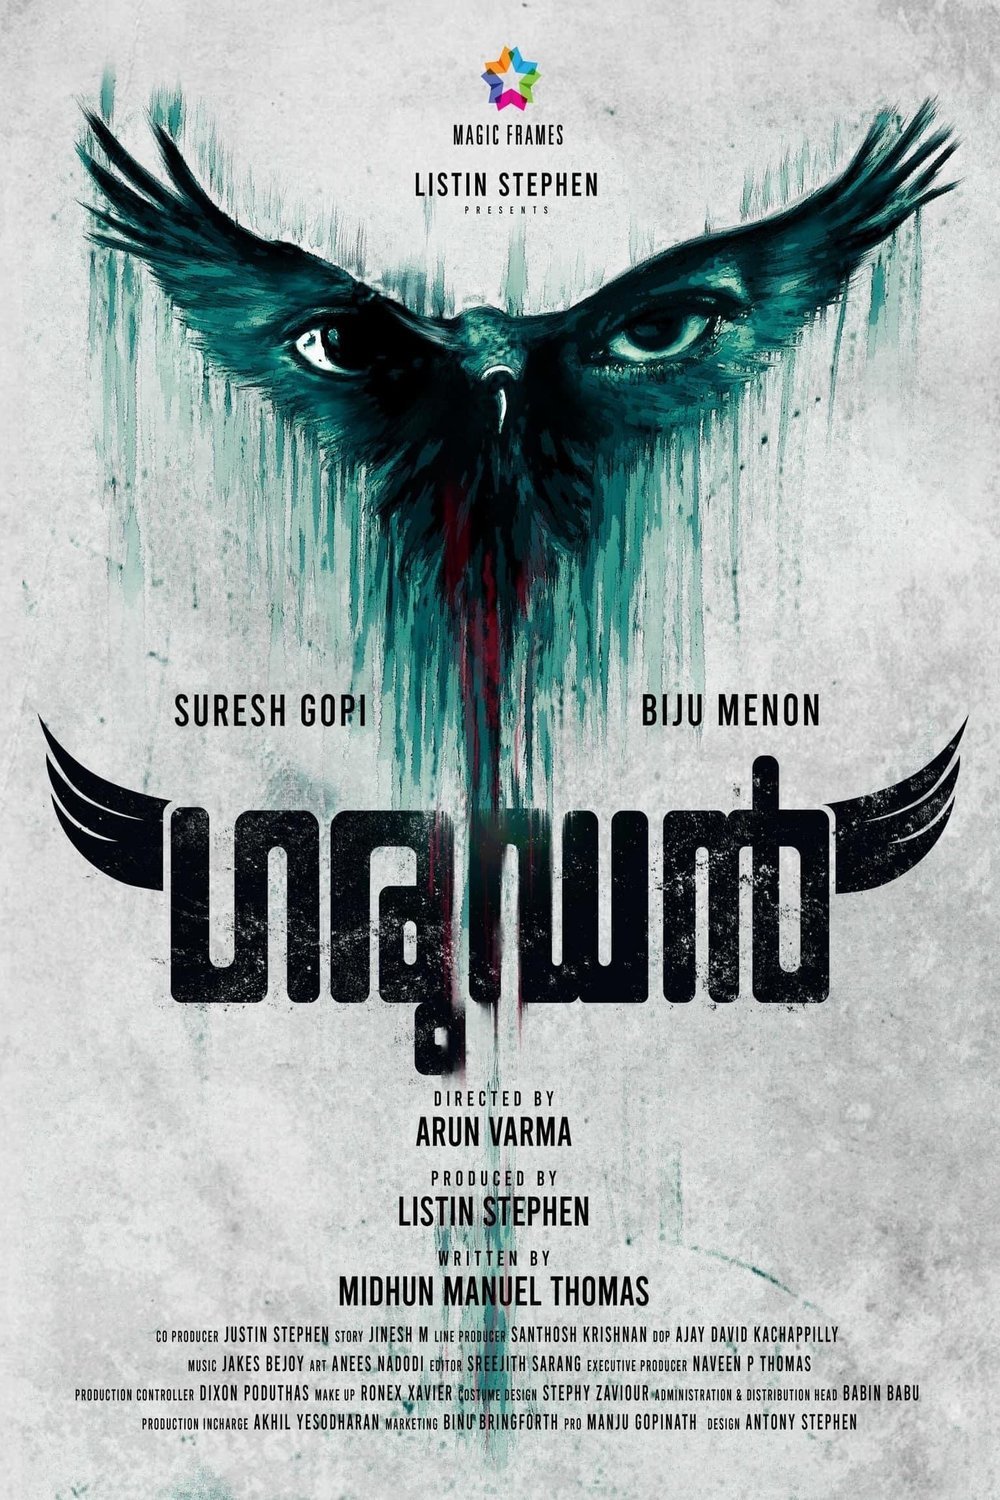 Malayalam poster of the movie Garudan